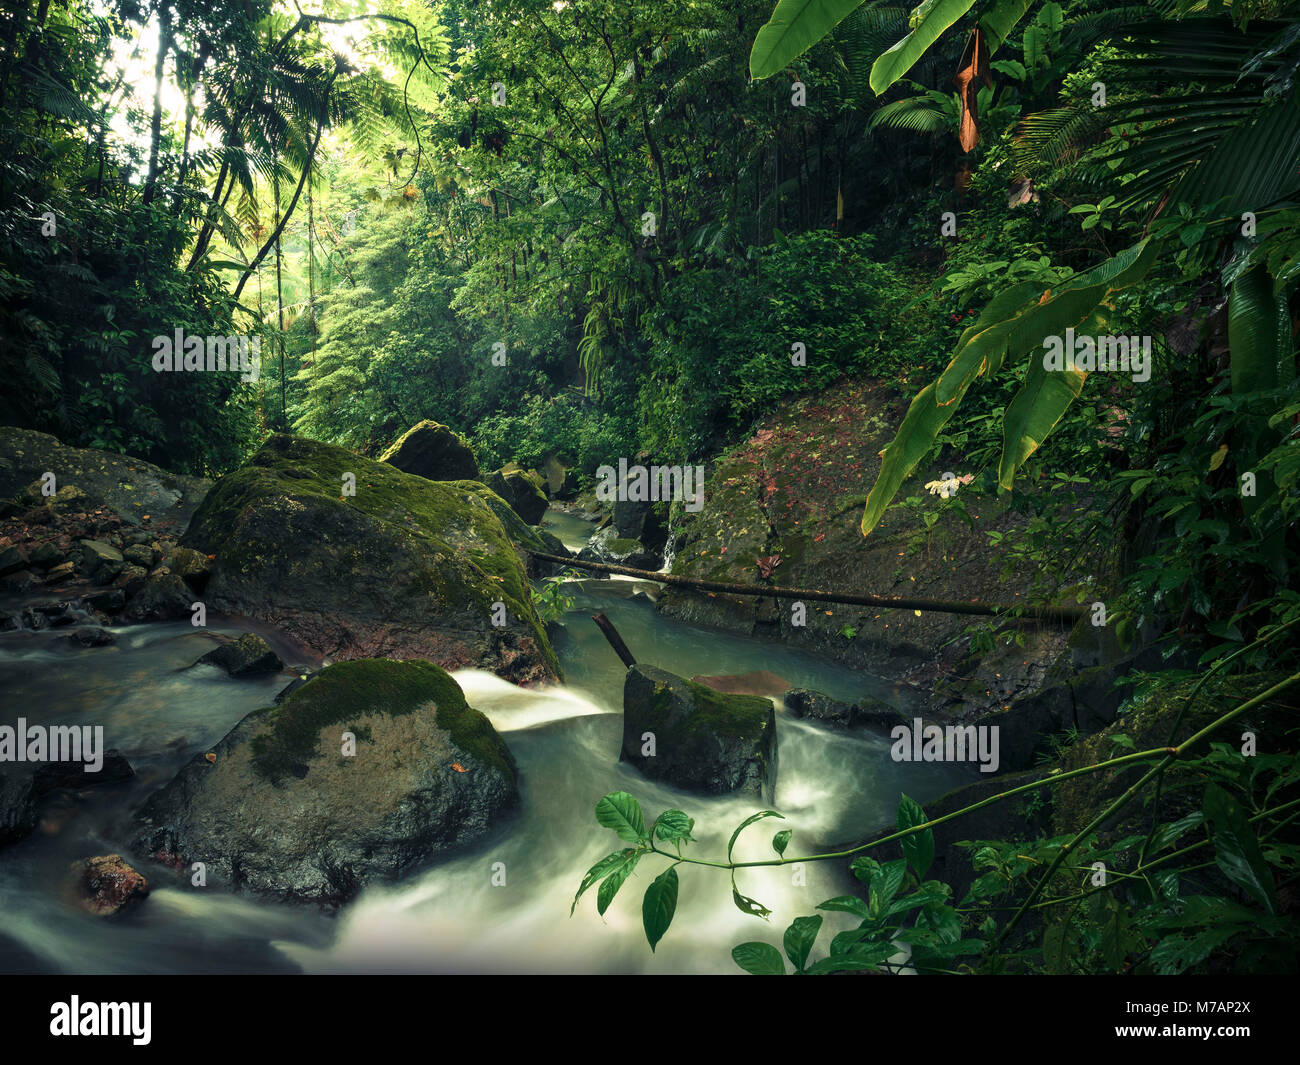 Jungle scene on the Caribbean island Stock Photo